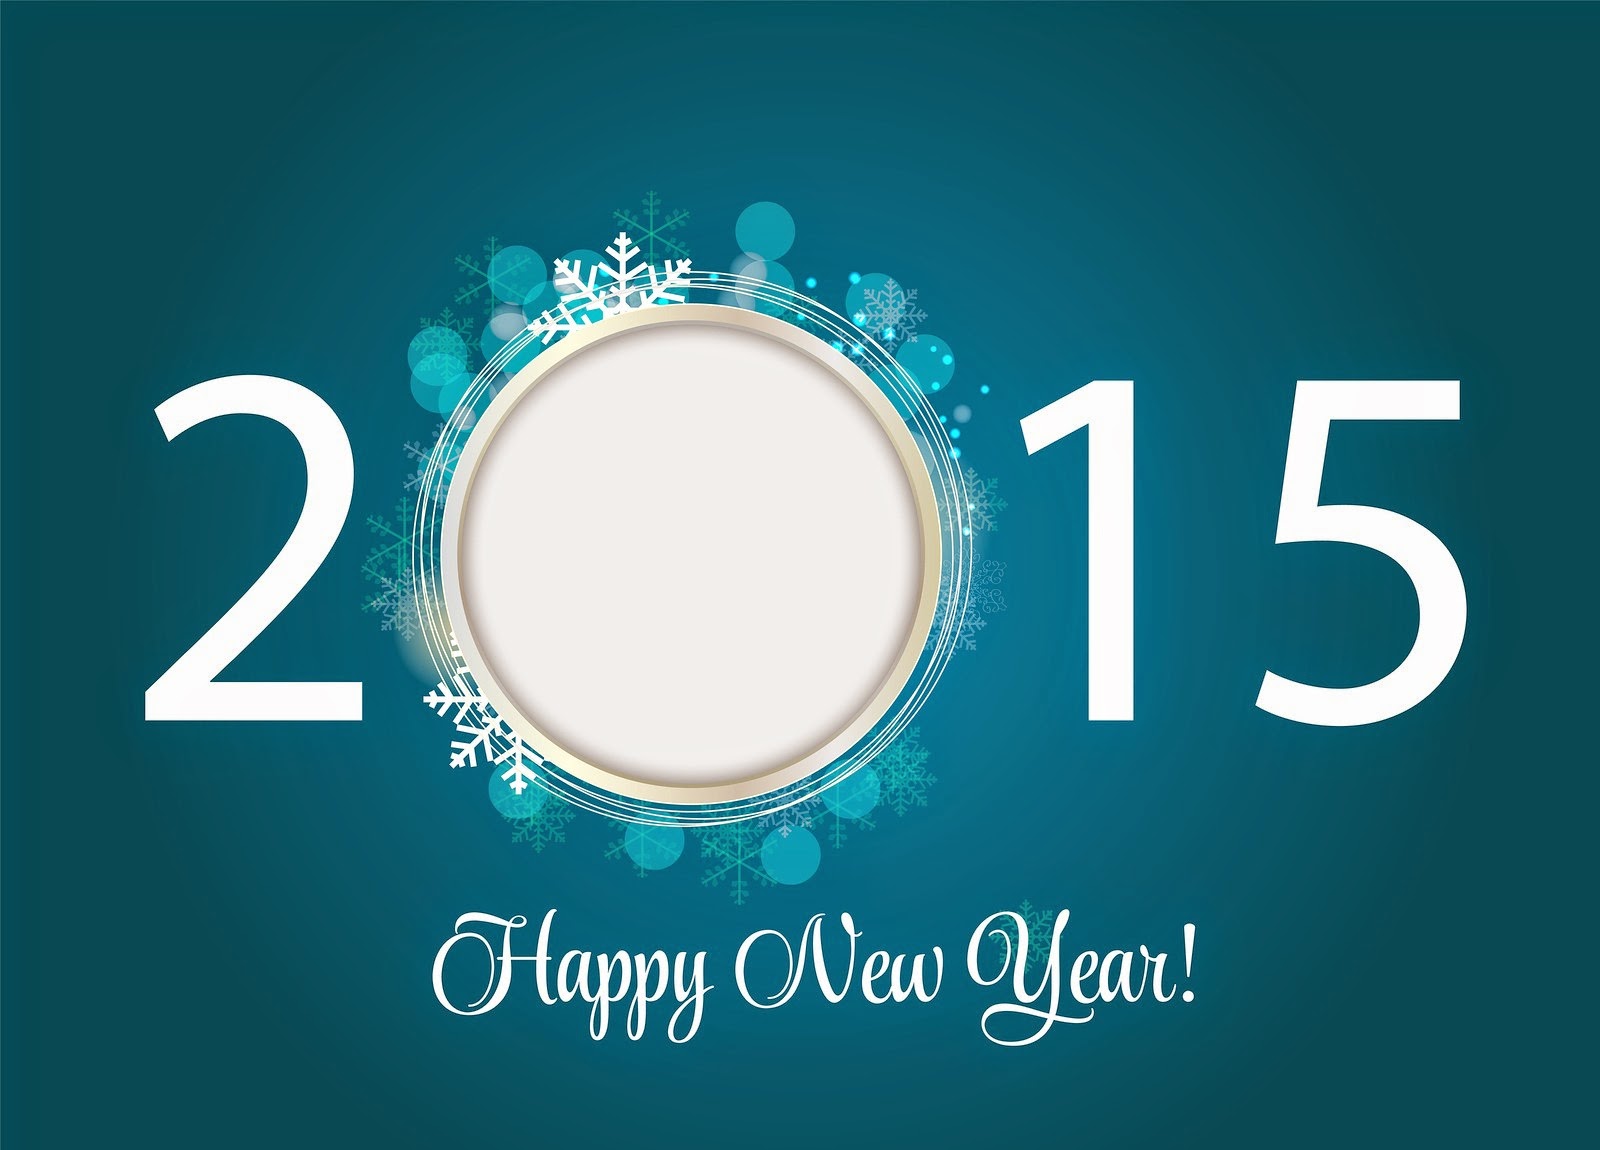 Happy New Year 2015 Wallpaper